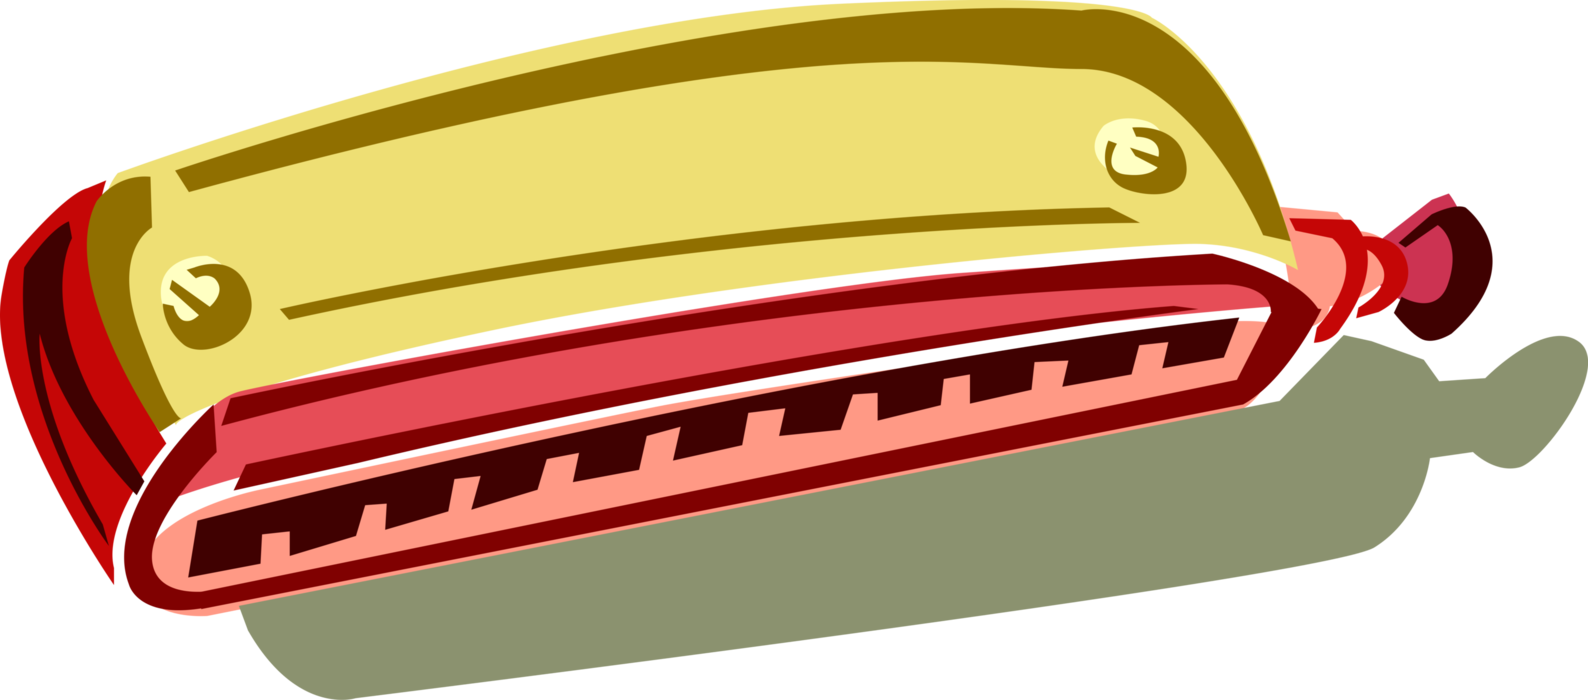 instruments clipart harmonica